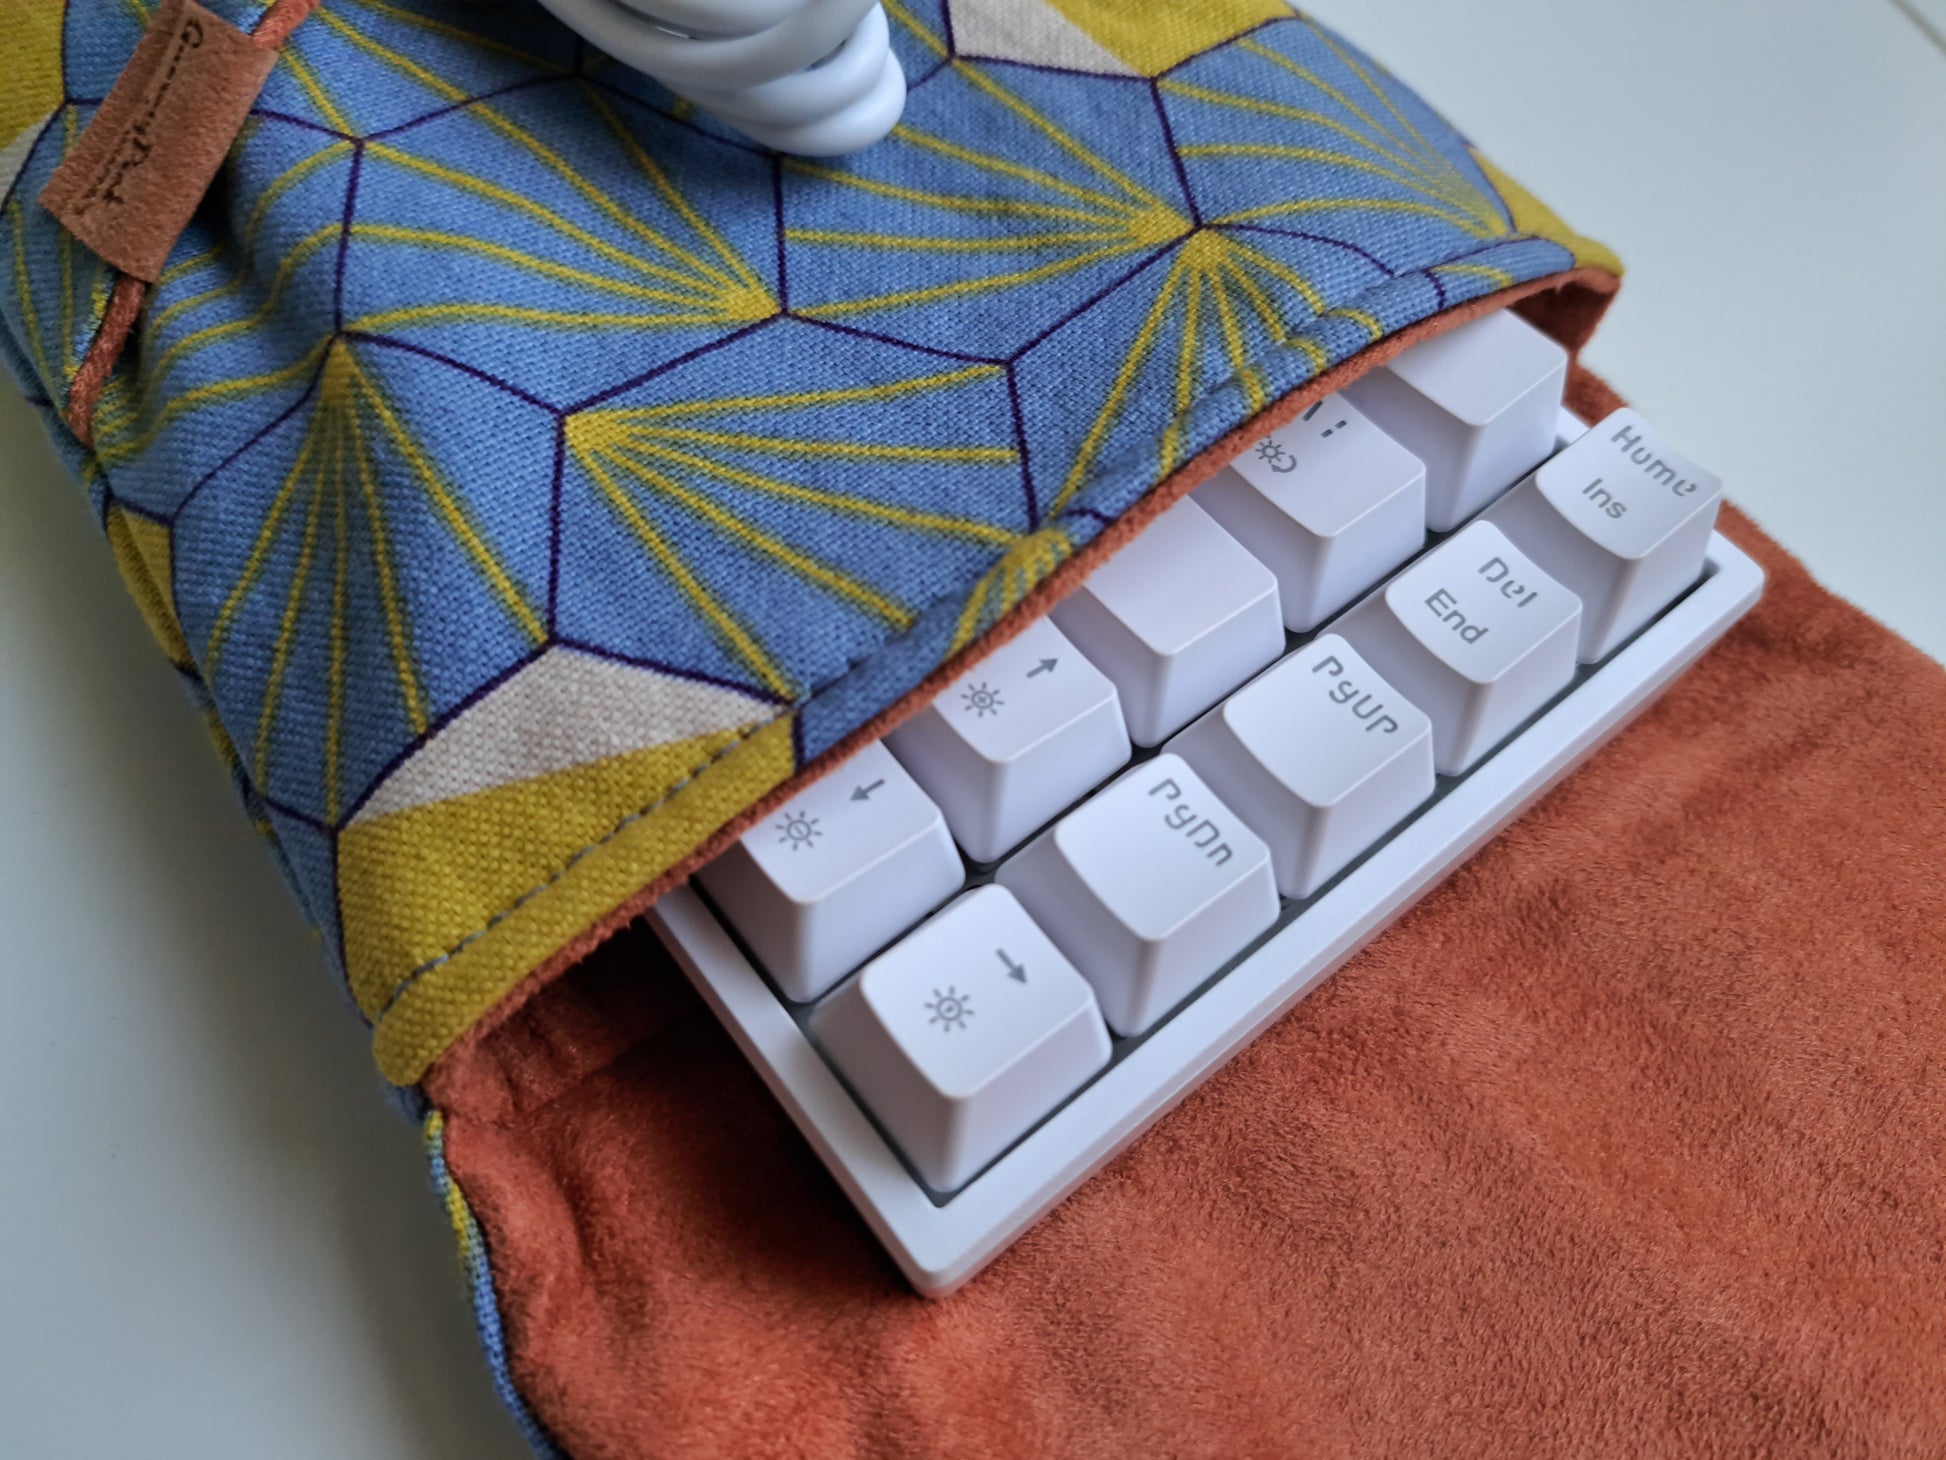 60-mechanical-keyboard-sleeve-case-bag-blue-yellow-closeup-gummypinkgraphics